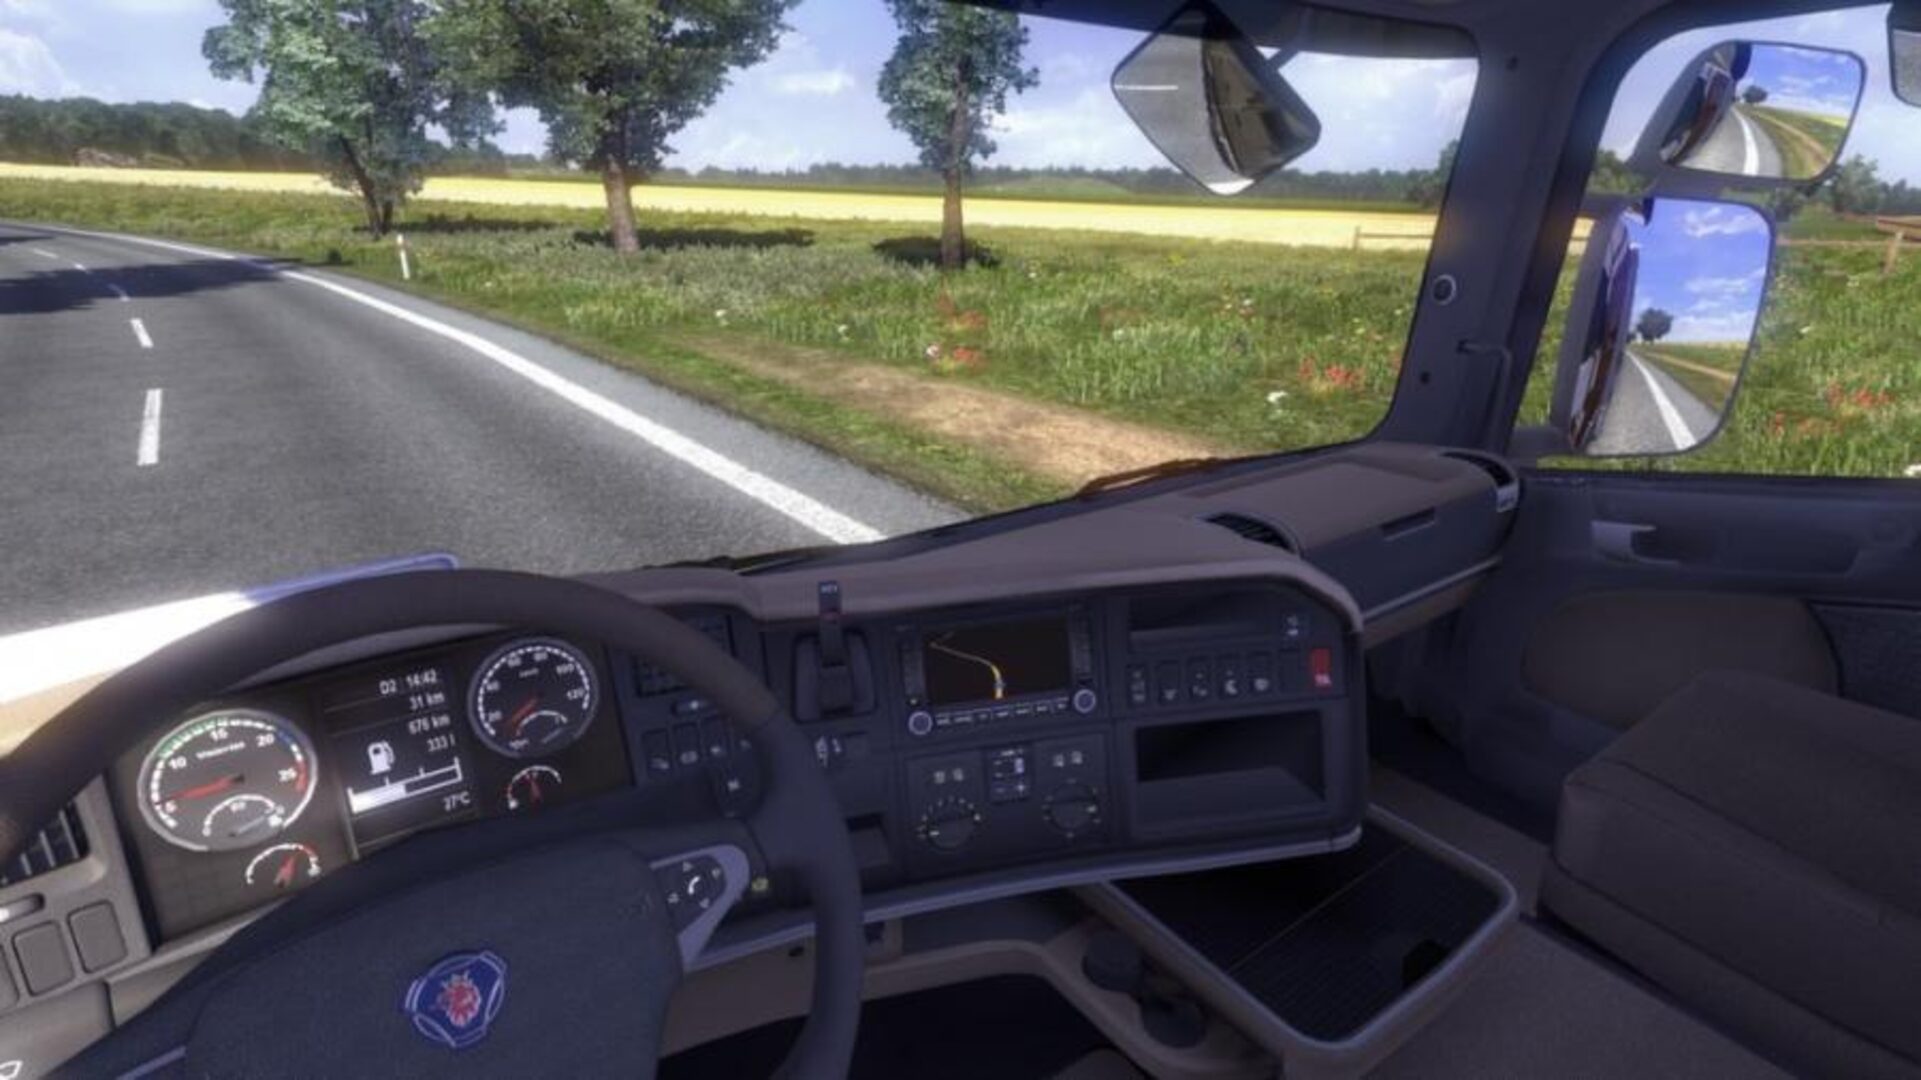 euro truck simulator 2 gold bundle